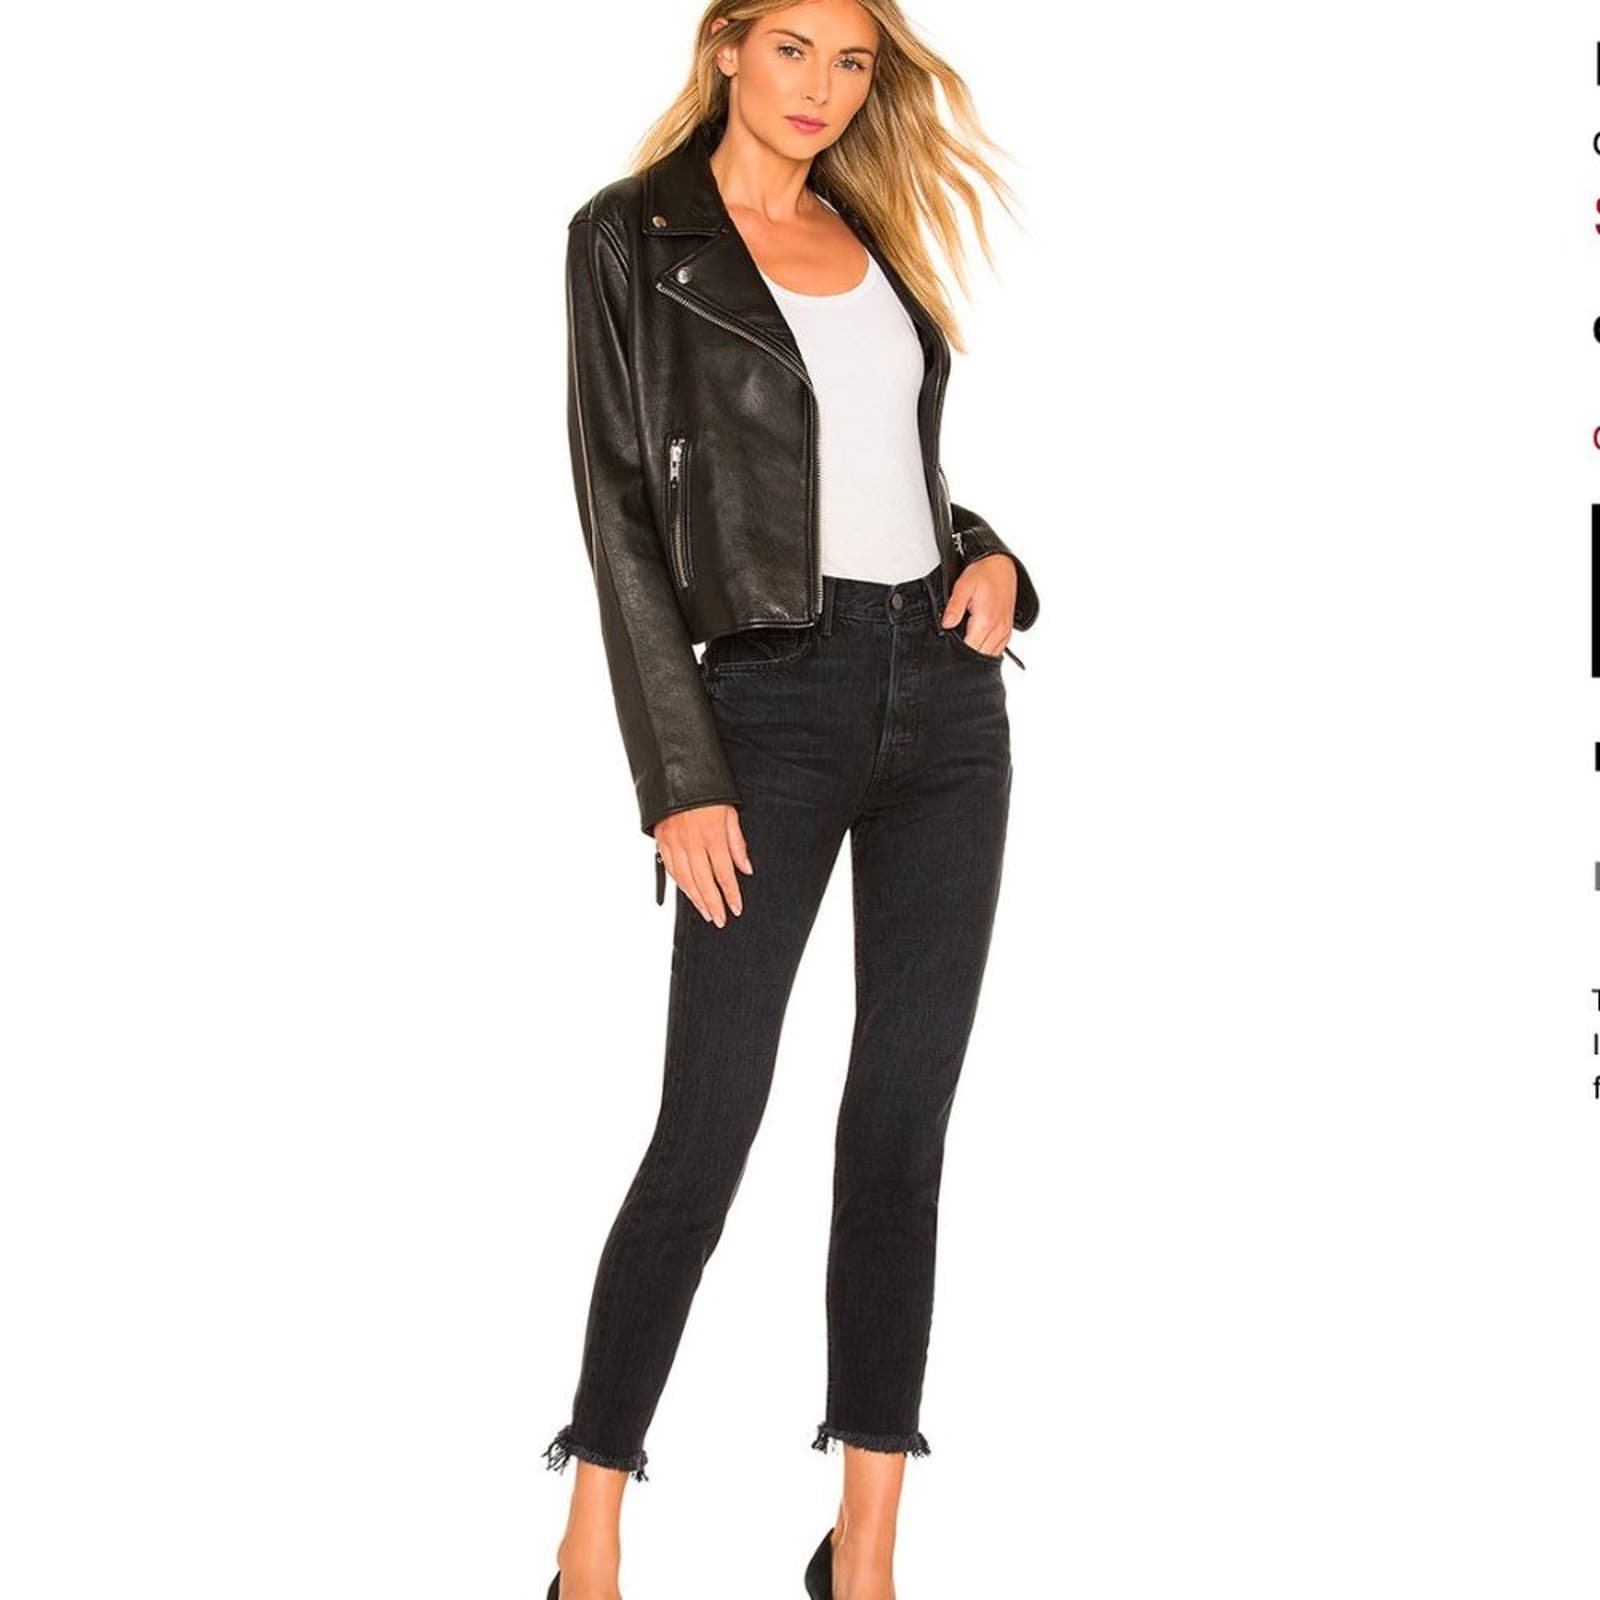 Buy Grlfrnd Karolina Skinny Jeans PJGfgytNh Store Online